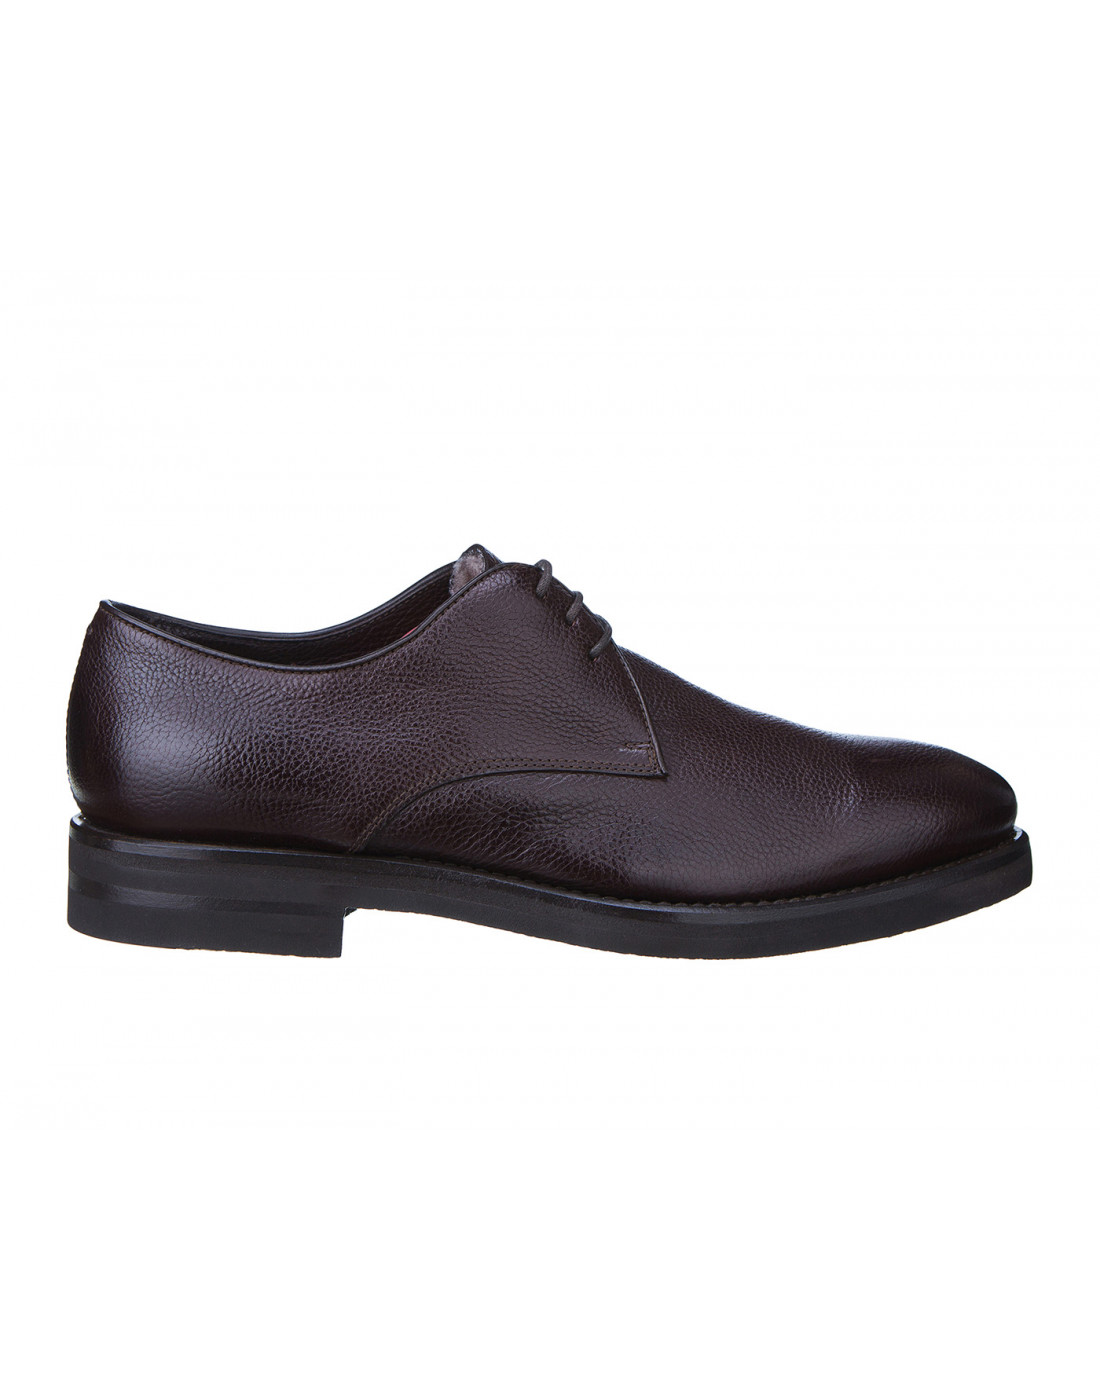 Туфли коричневые мужские Henderson S58207-1